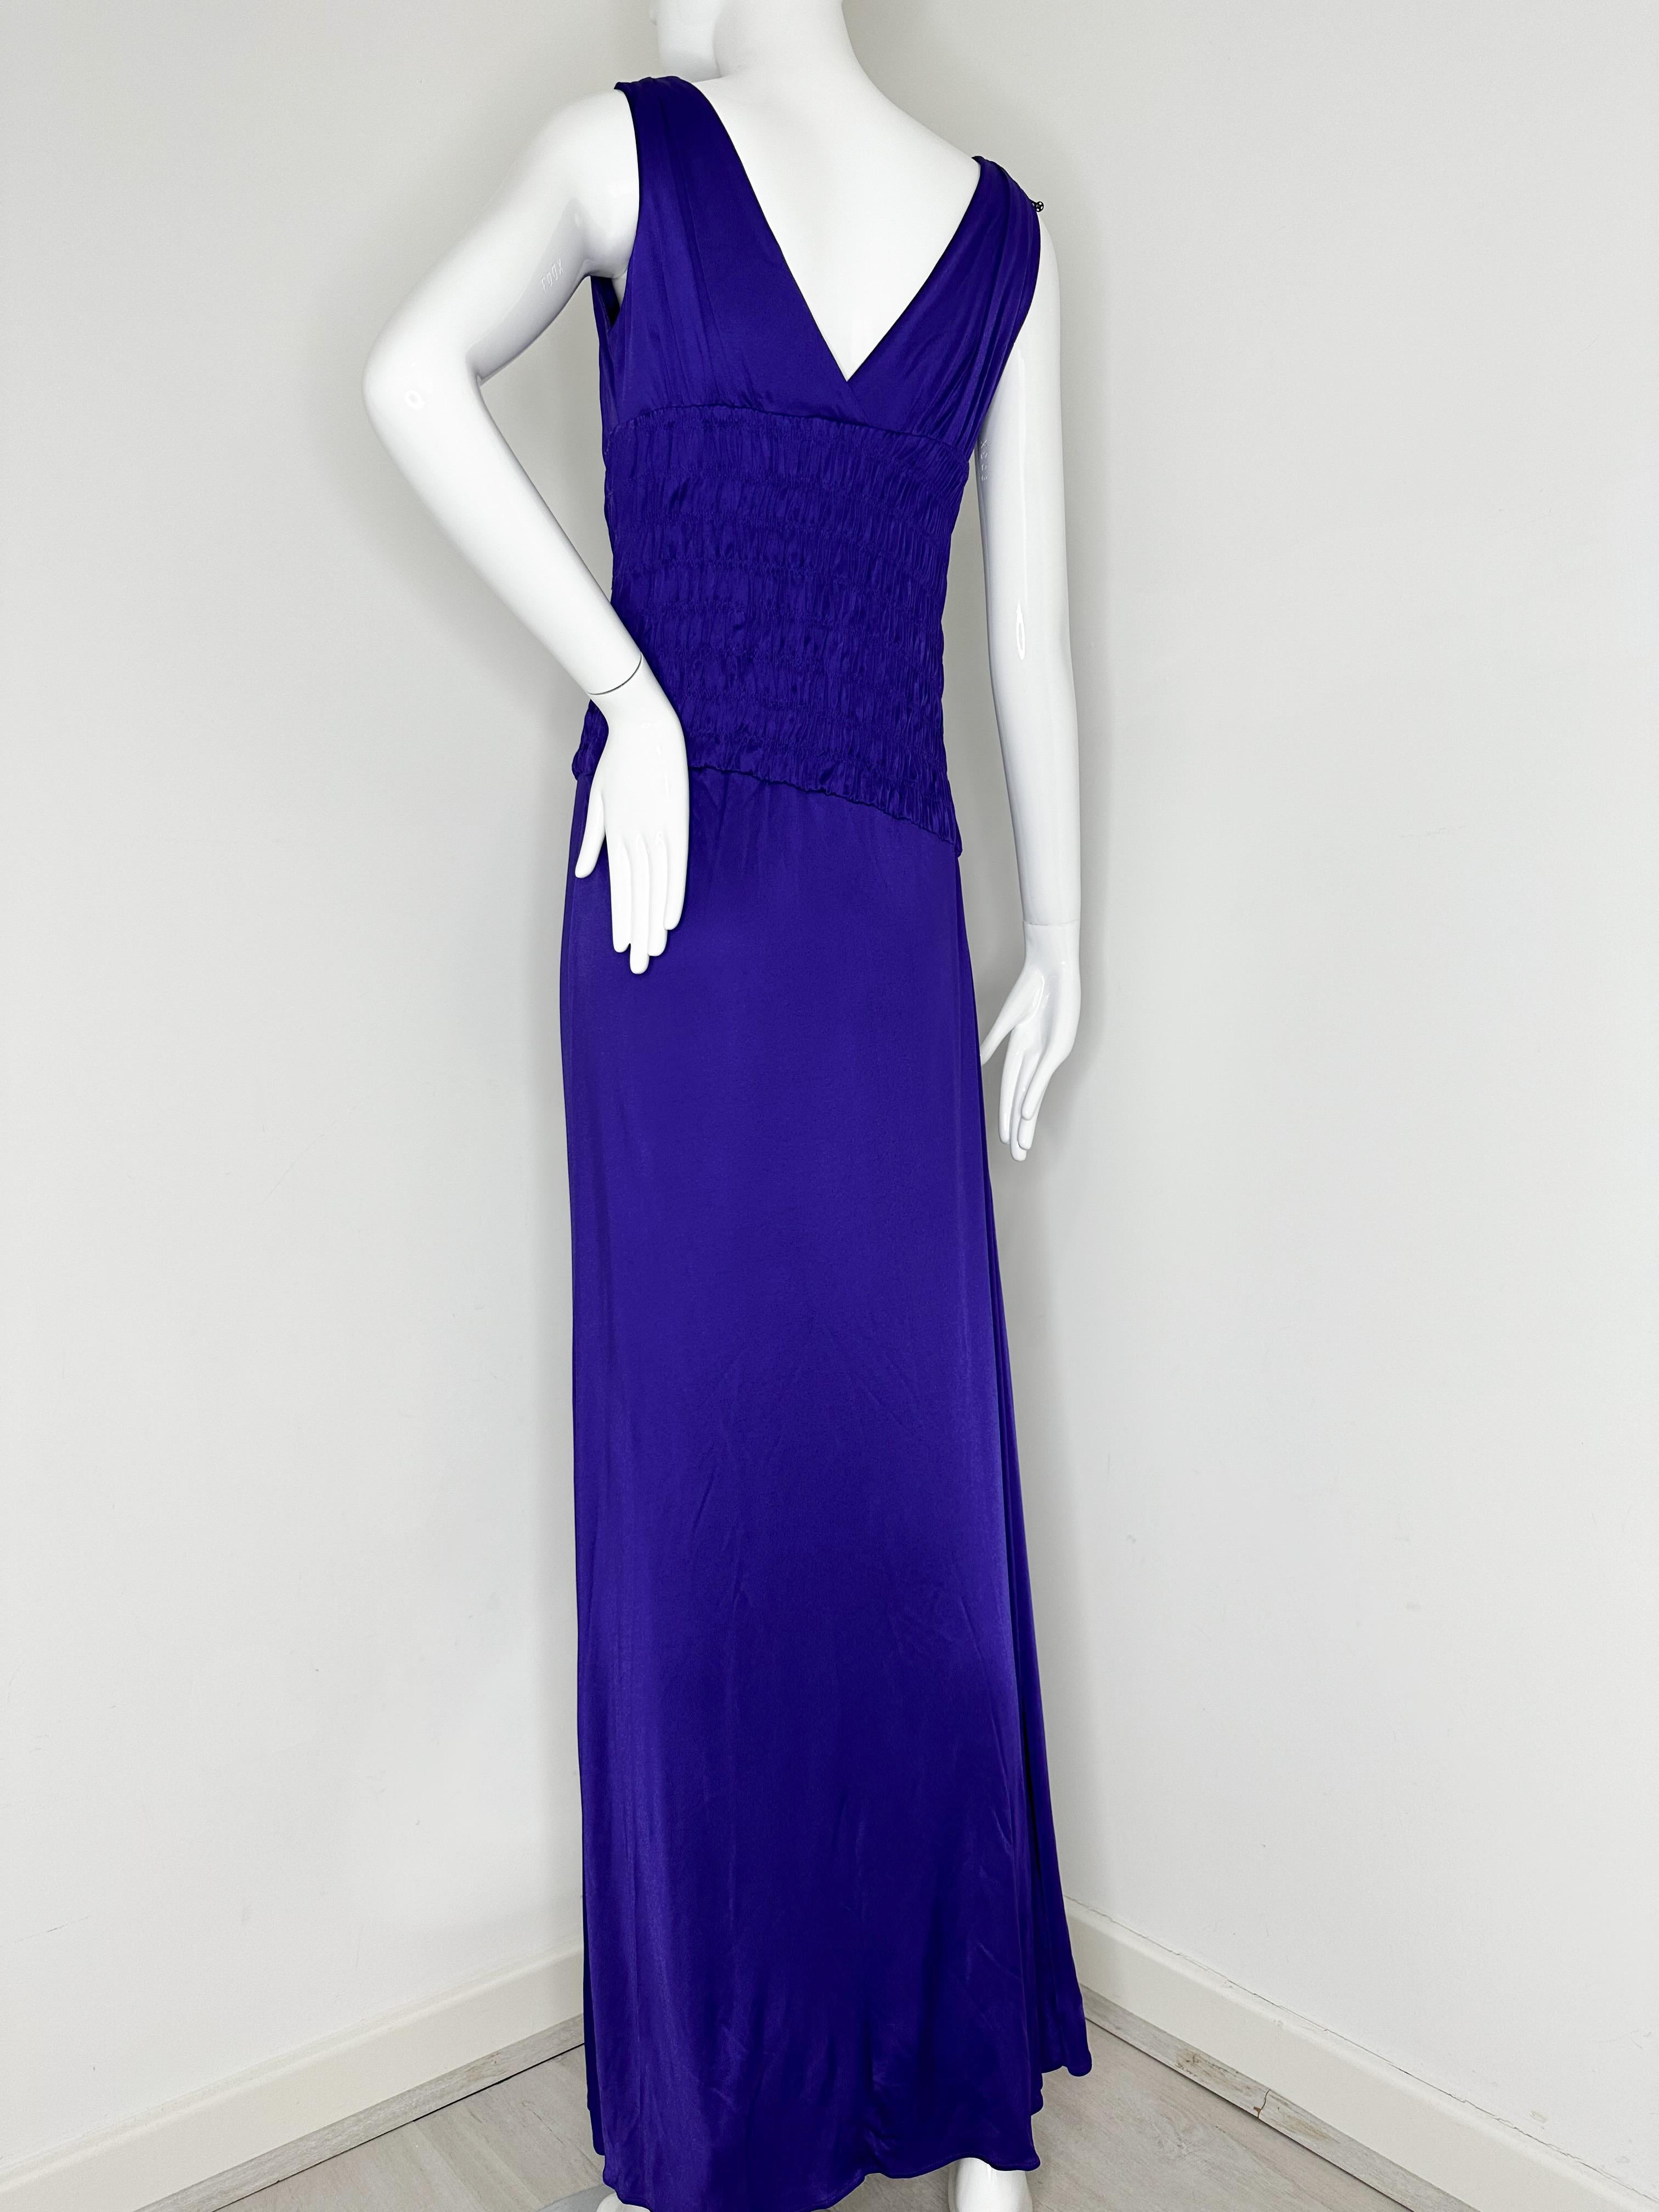 Christian Dior by John Galliano 2009 purple maxi dress In Good Condition In Annandale, VA